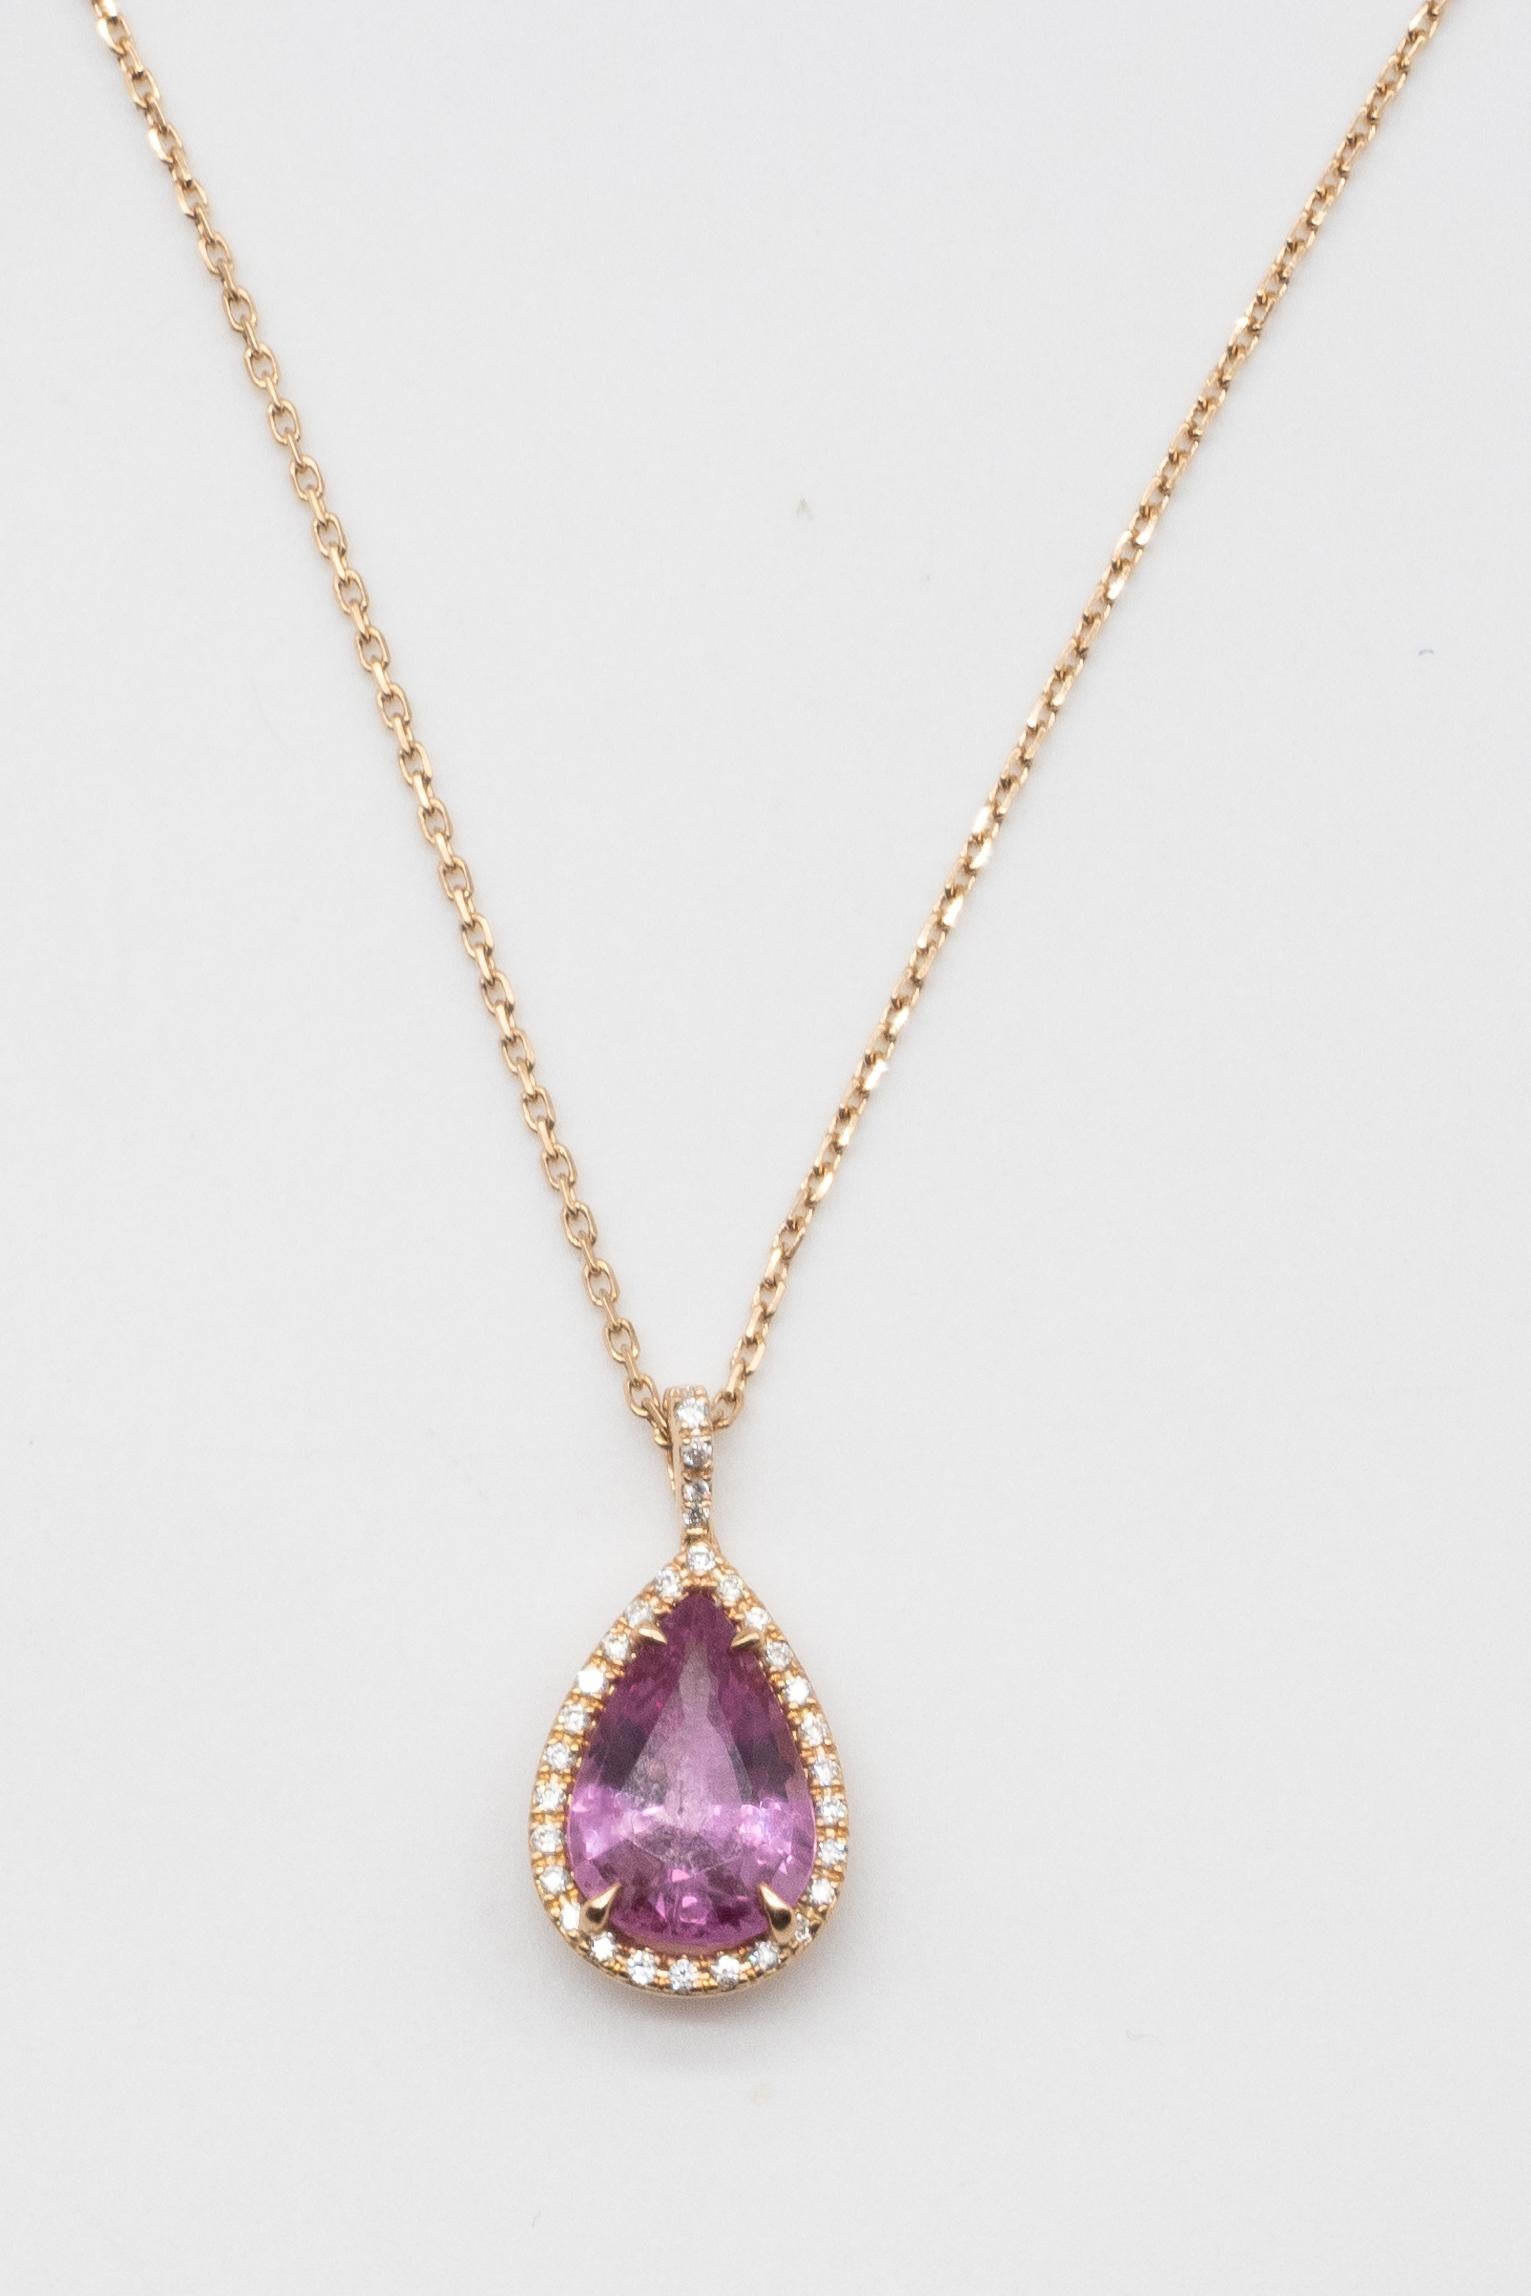 18K Rose Gold, Pink Sapphire, Diamond Pendant For Sale 3